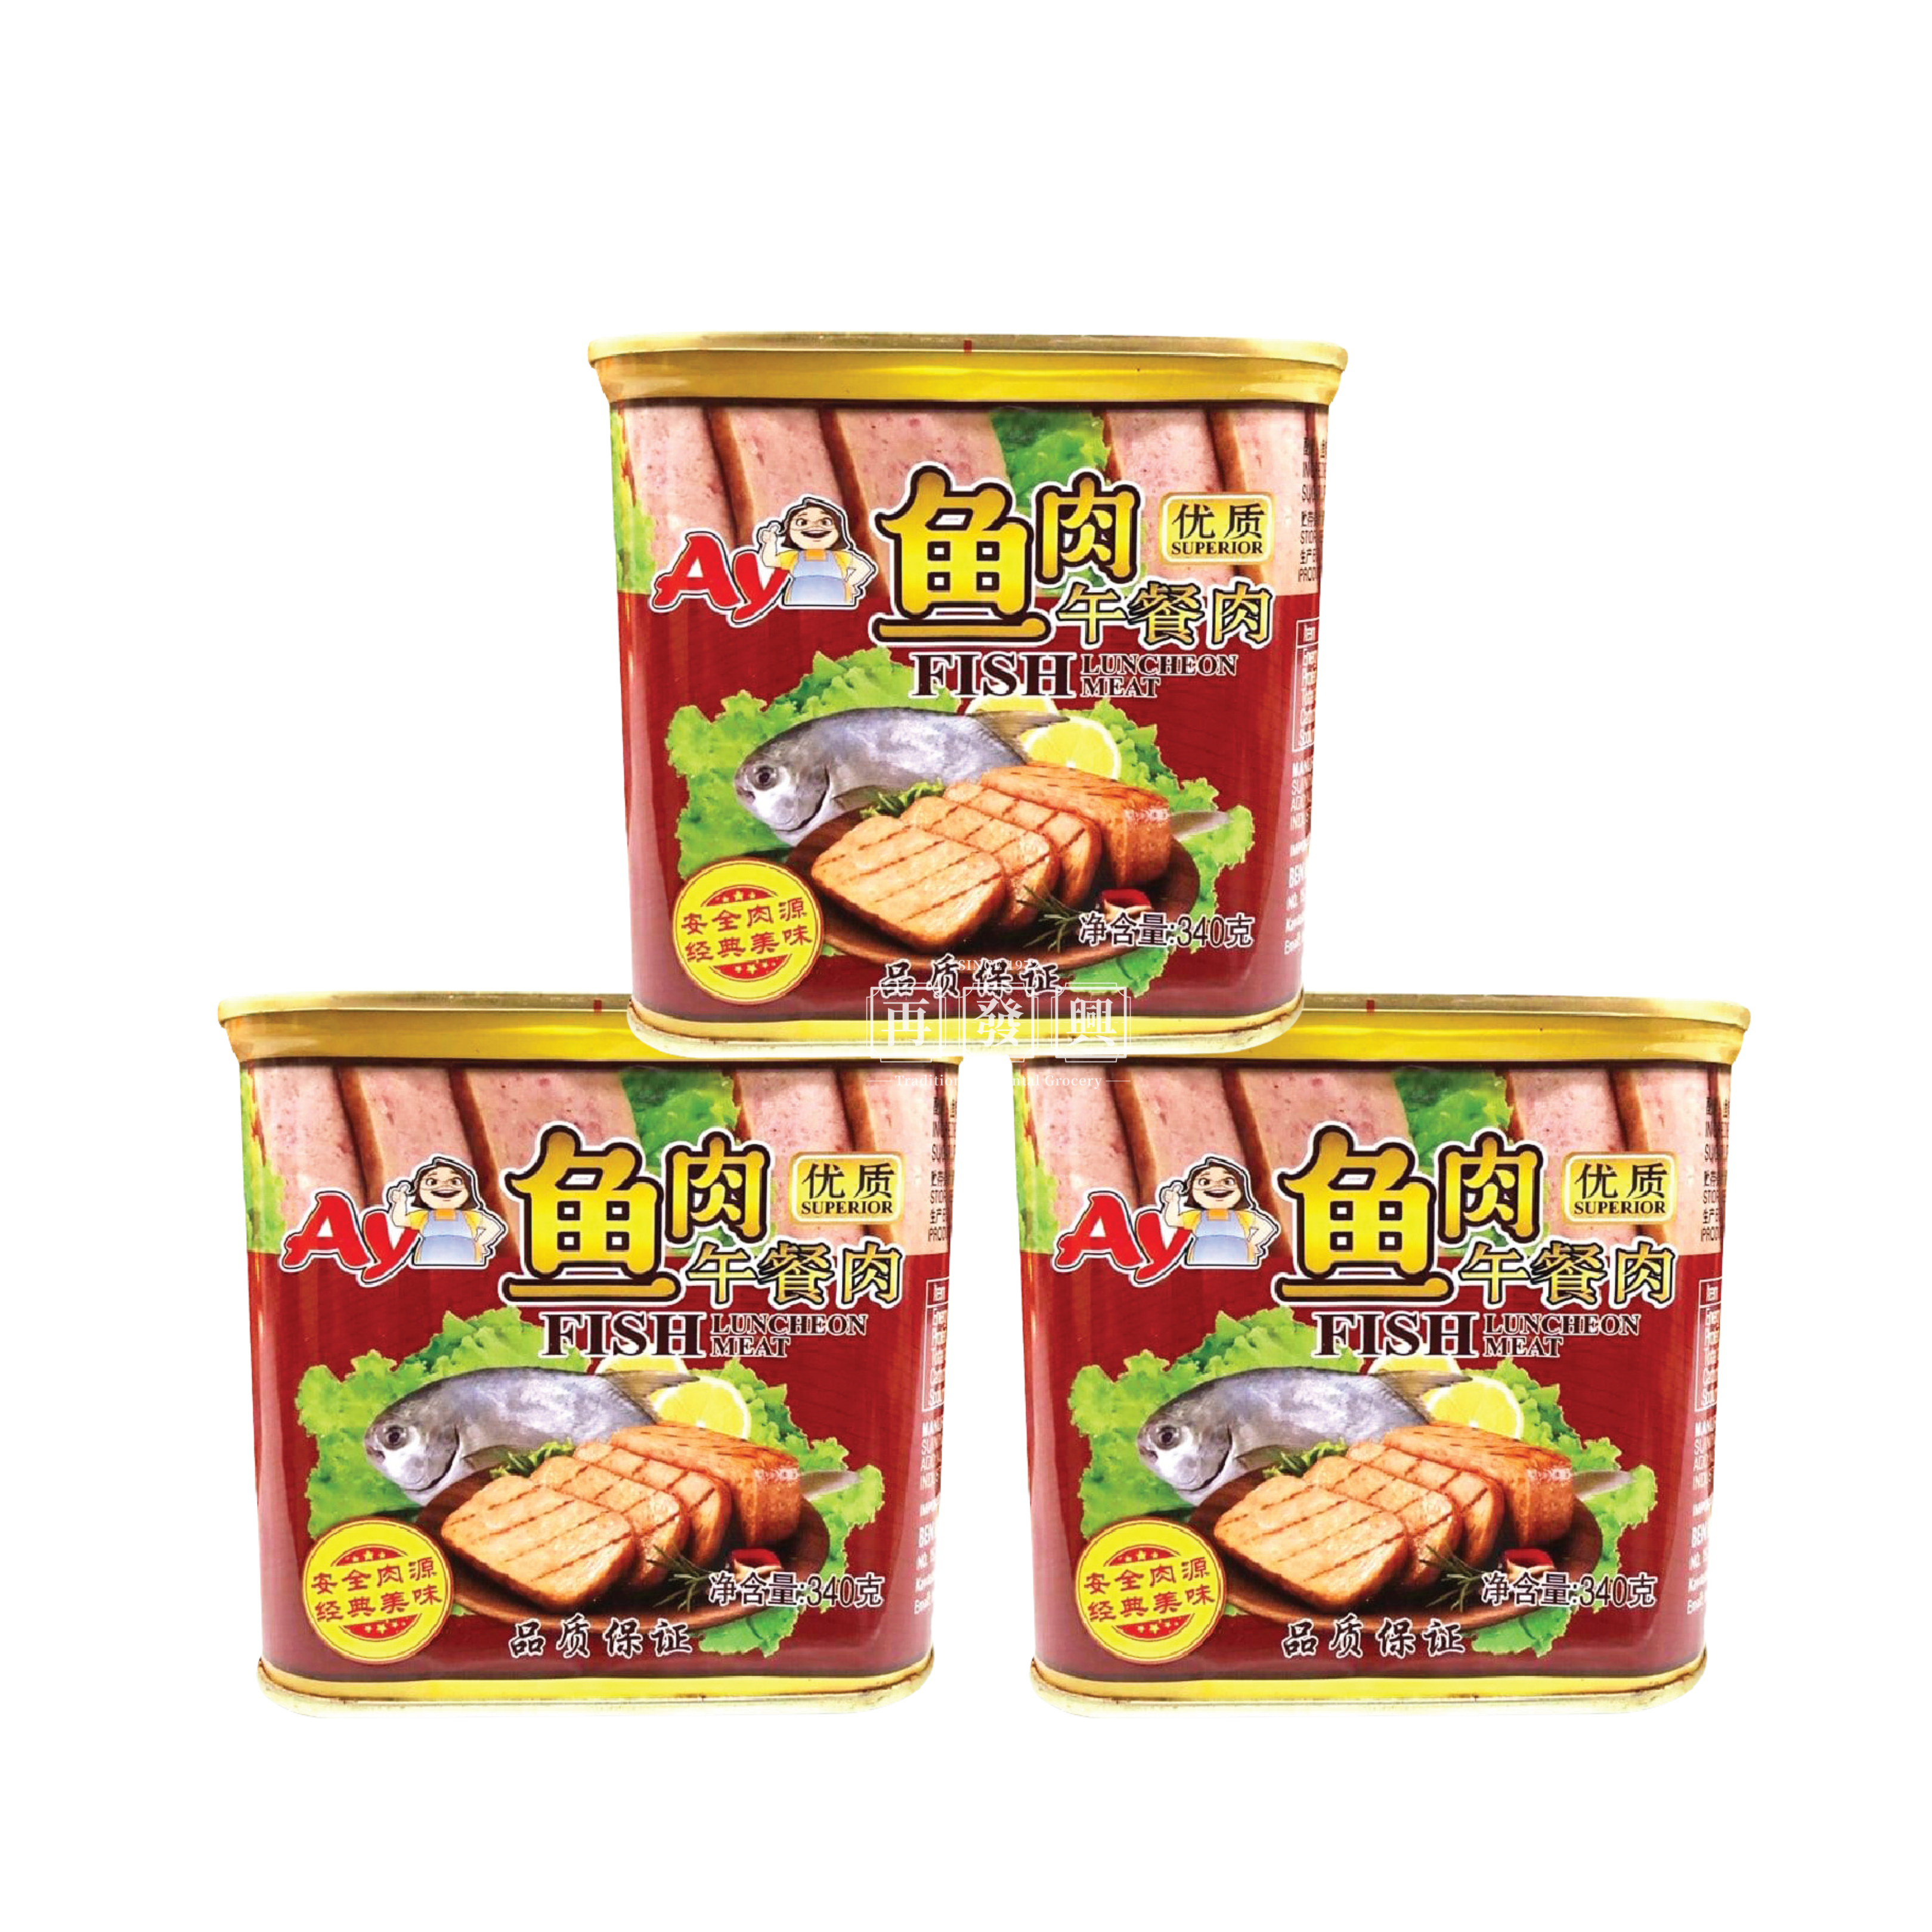 AY Auntie Yee Fish Luncheon Meat Promo Set 阿姨优质鱼肉午餐肉优惠装 (3 can)